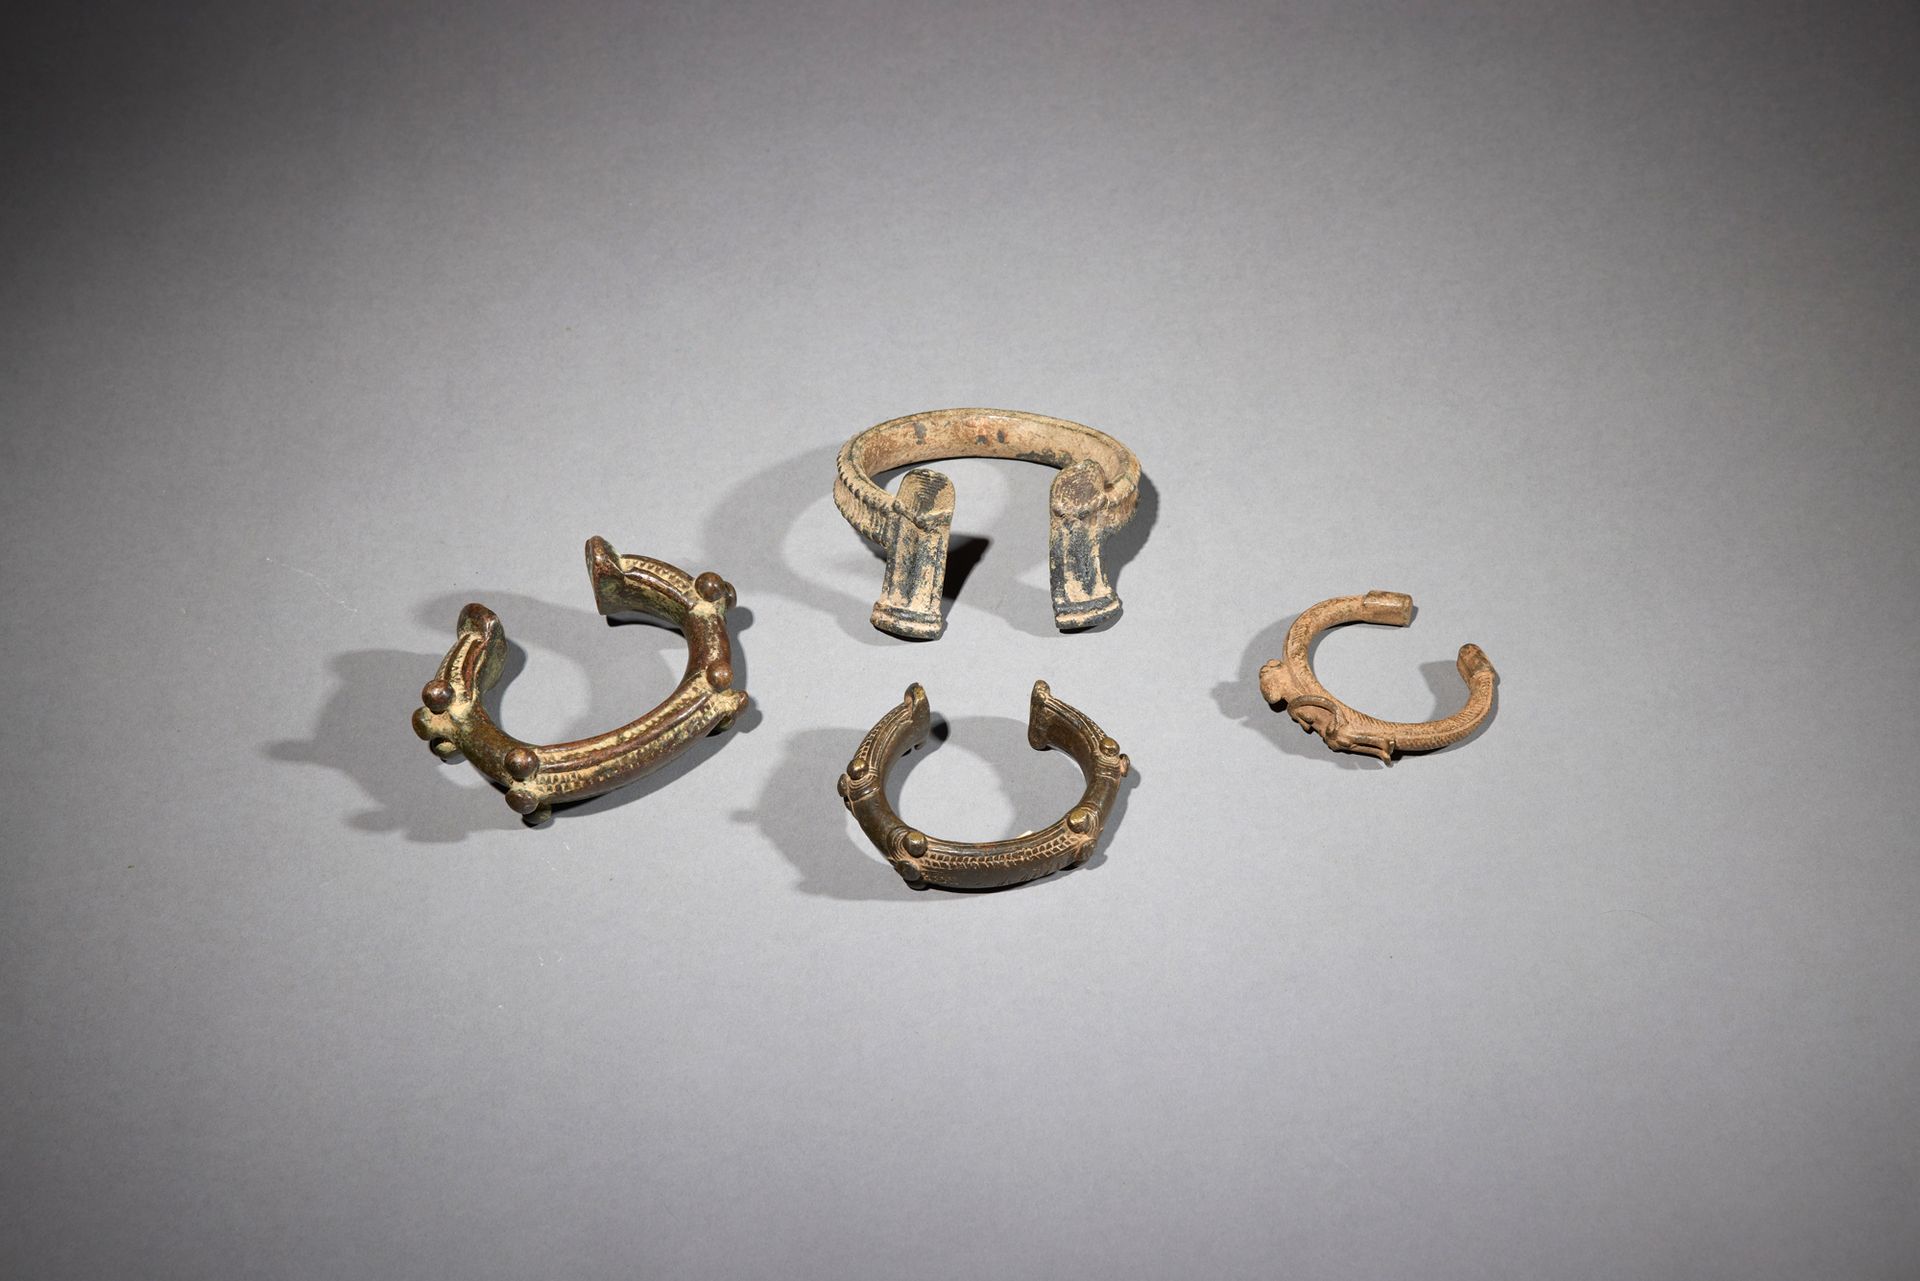 Null 四条甘氏手链

布基纳法索

铜质

D. 7.1至11厘米



一套三件青铜甘氏手镯，由浮雕装饰的厚实开口带组成。